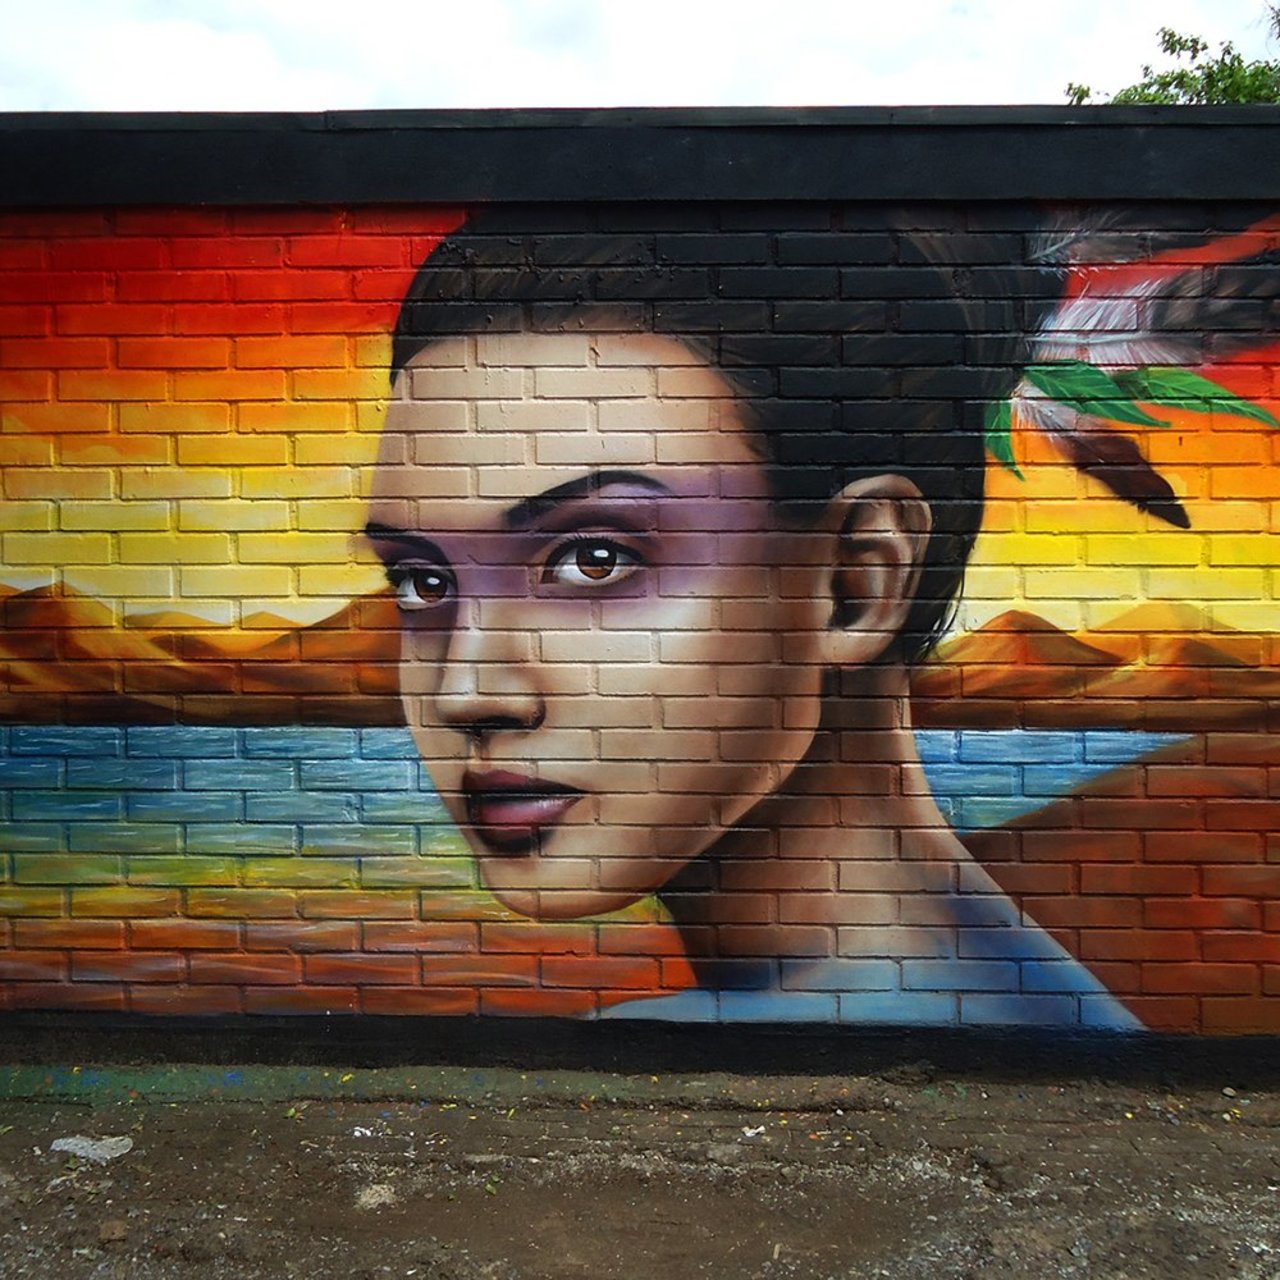 #graffiti #mural #mujer #indigena #streetart #artegrafia #hacrew #artecallejero #puentealto #santiago #chile https://t.co/l9KPBEYYt6